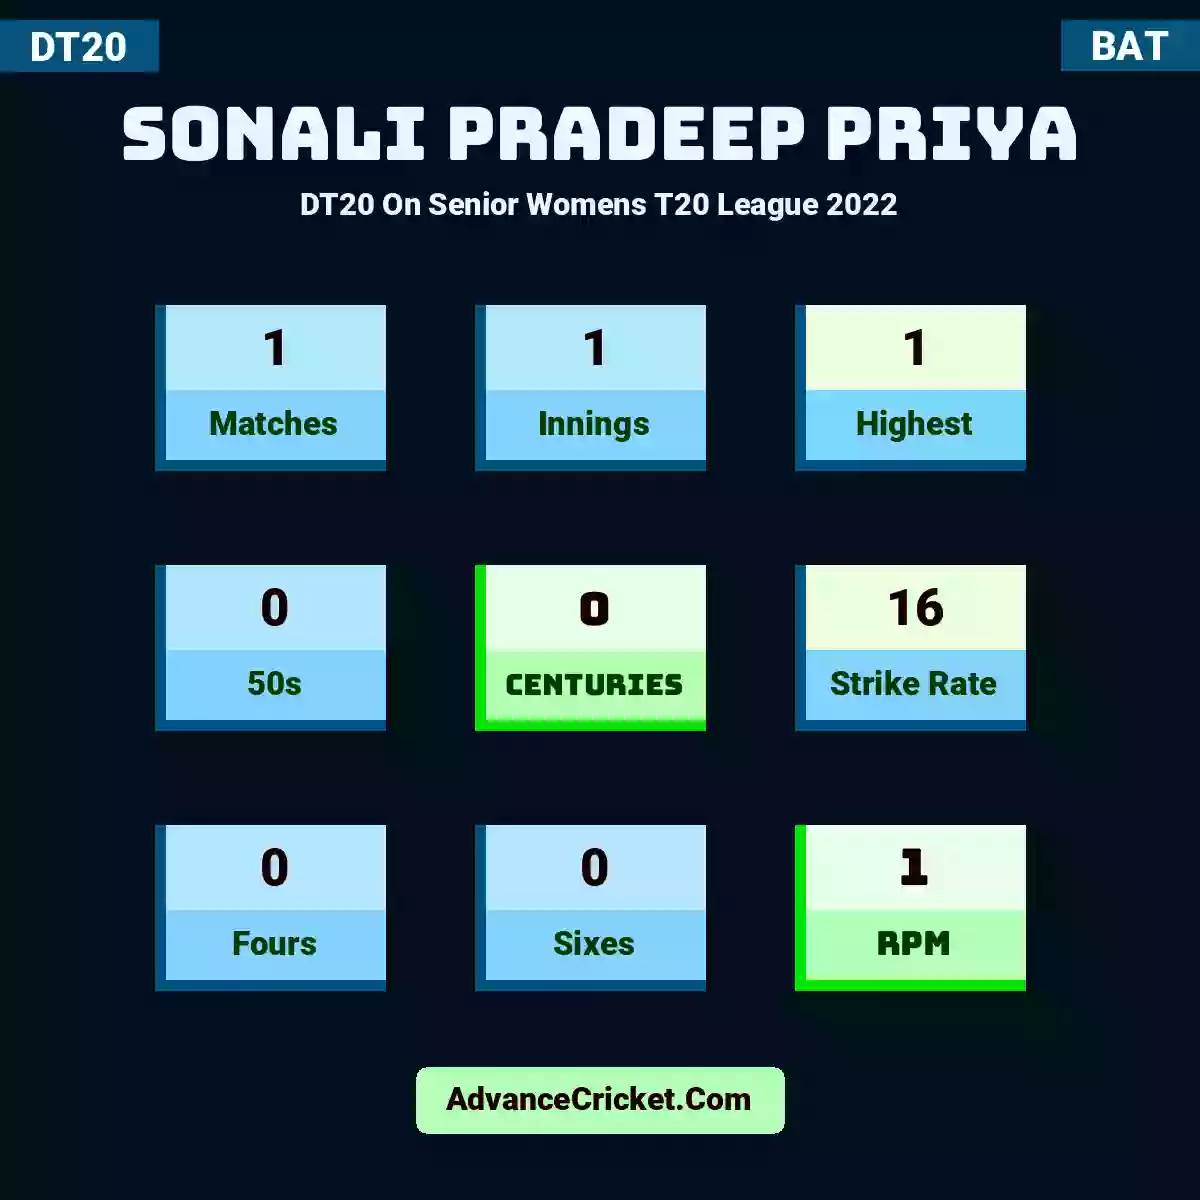 Sonali Pradeep Priya DT20  On Senior Womens T20 League 2022, Sonali Pradeep Priya played 1 matches, scored 1 runs as highest, 0 half-centuries, and 0 centuries, with a strike rate of 16. S.Pradeep.Priya hit 0 fours and 0 sixes, with an RPM of 1.